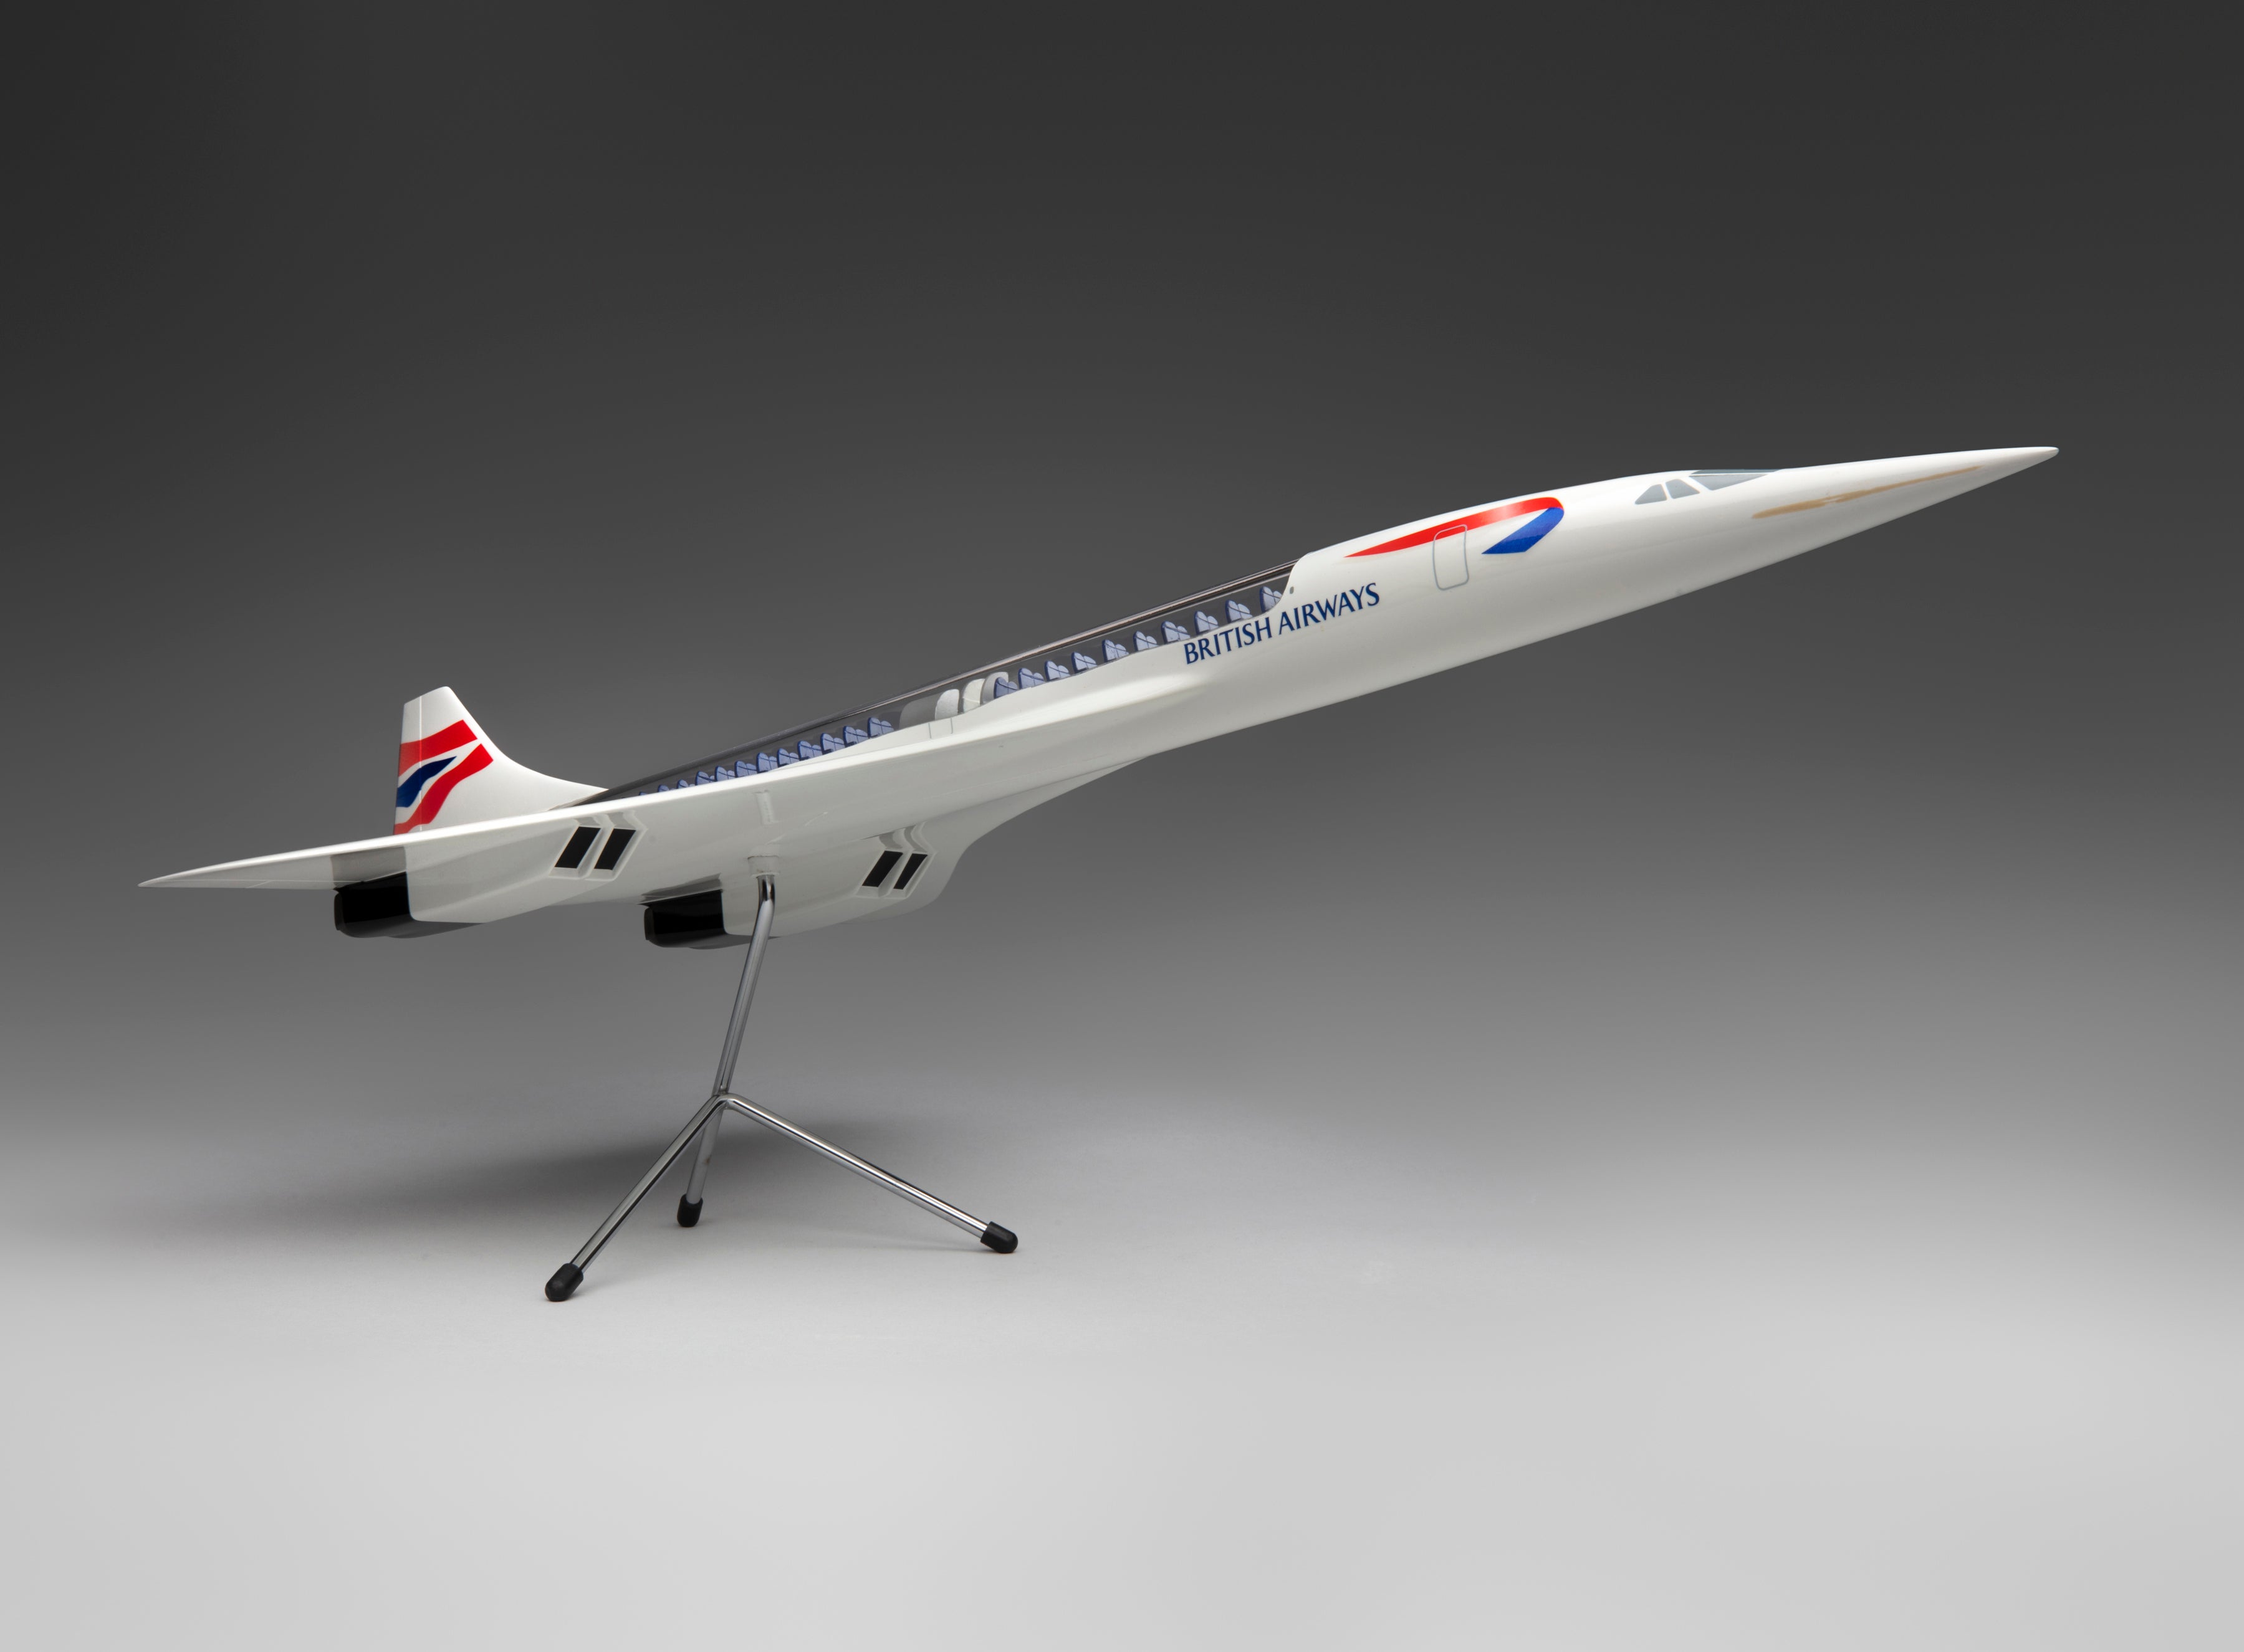 British Airways Concorde SST cutaway model aircraft  1970s 